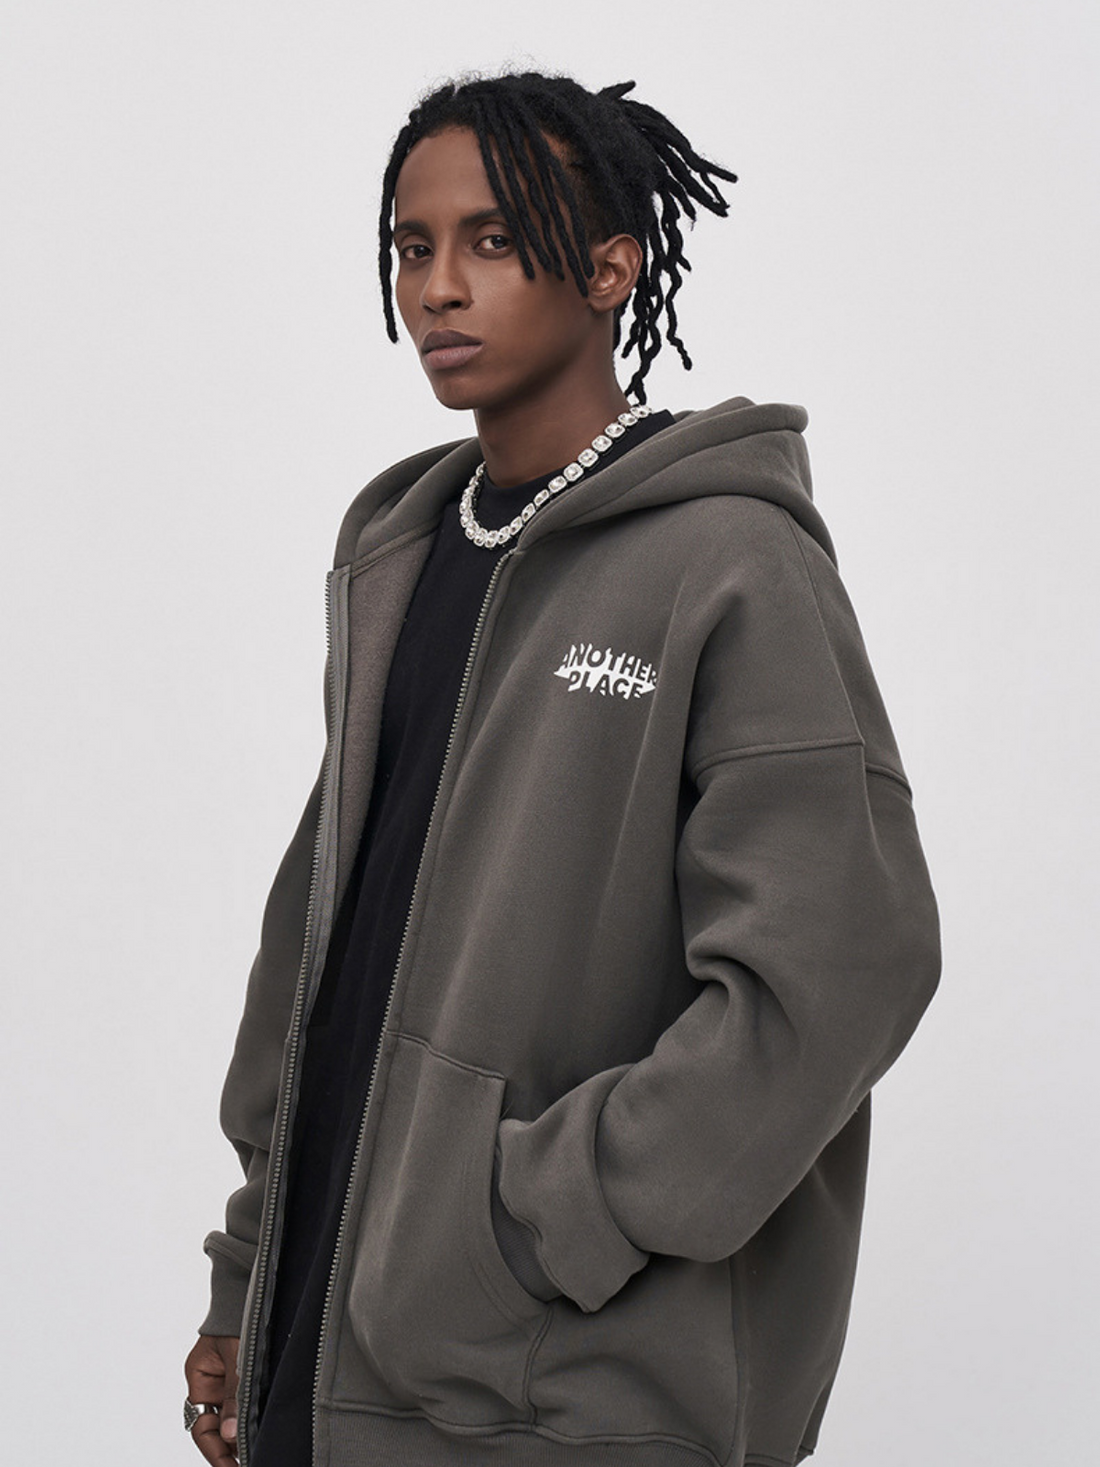 ANOTHER - Printed Zip Up Hoodie | Teenwear.eu